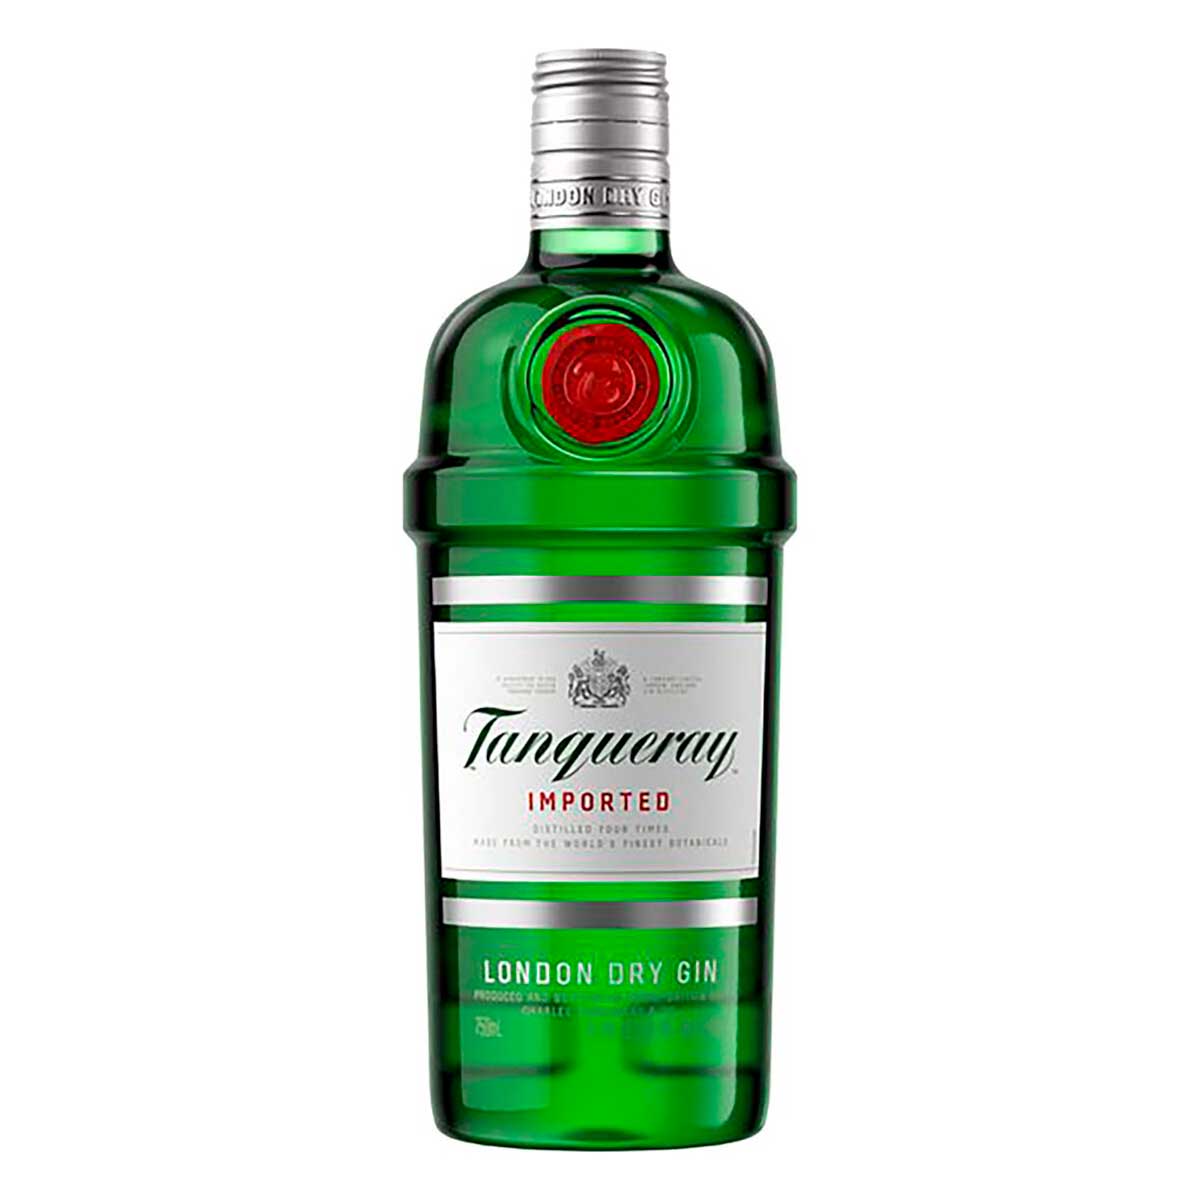 gin-tanqueray-london-dry-750ml-1.jpg